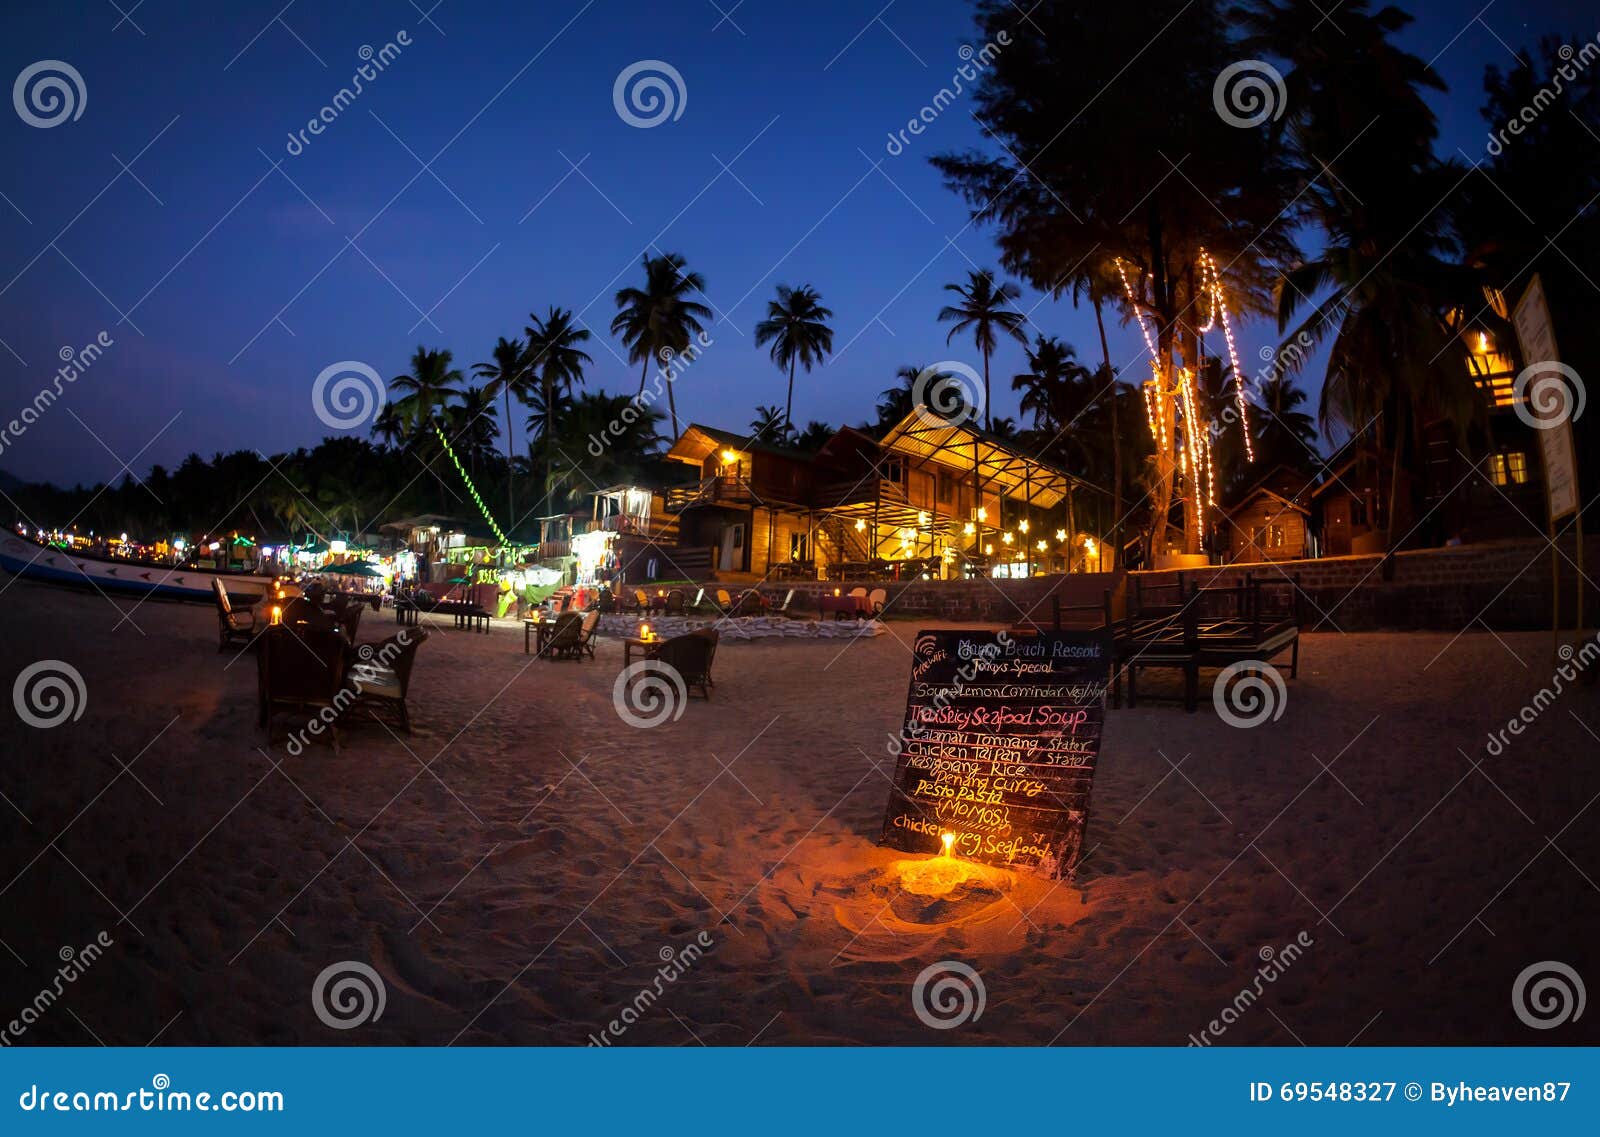 romantic beach at night in goa